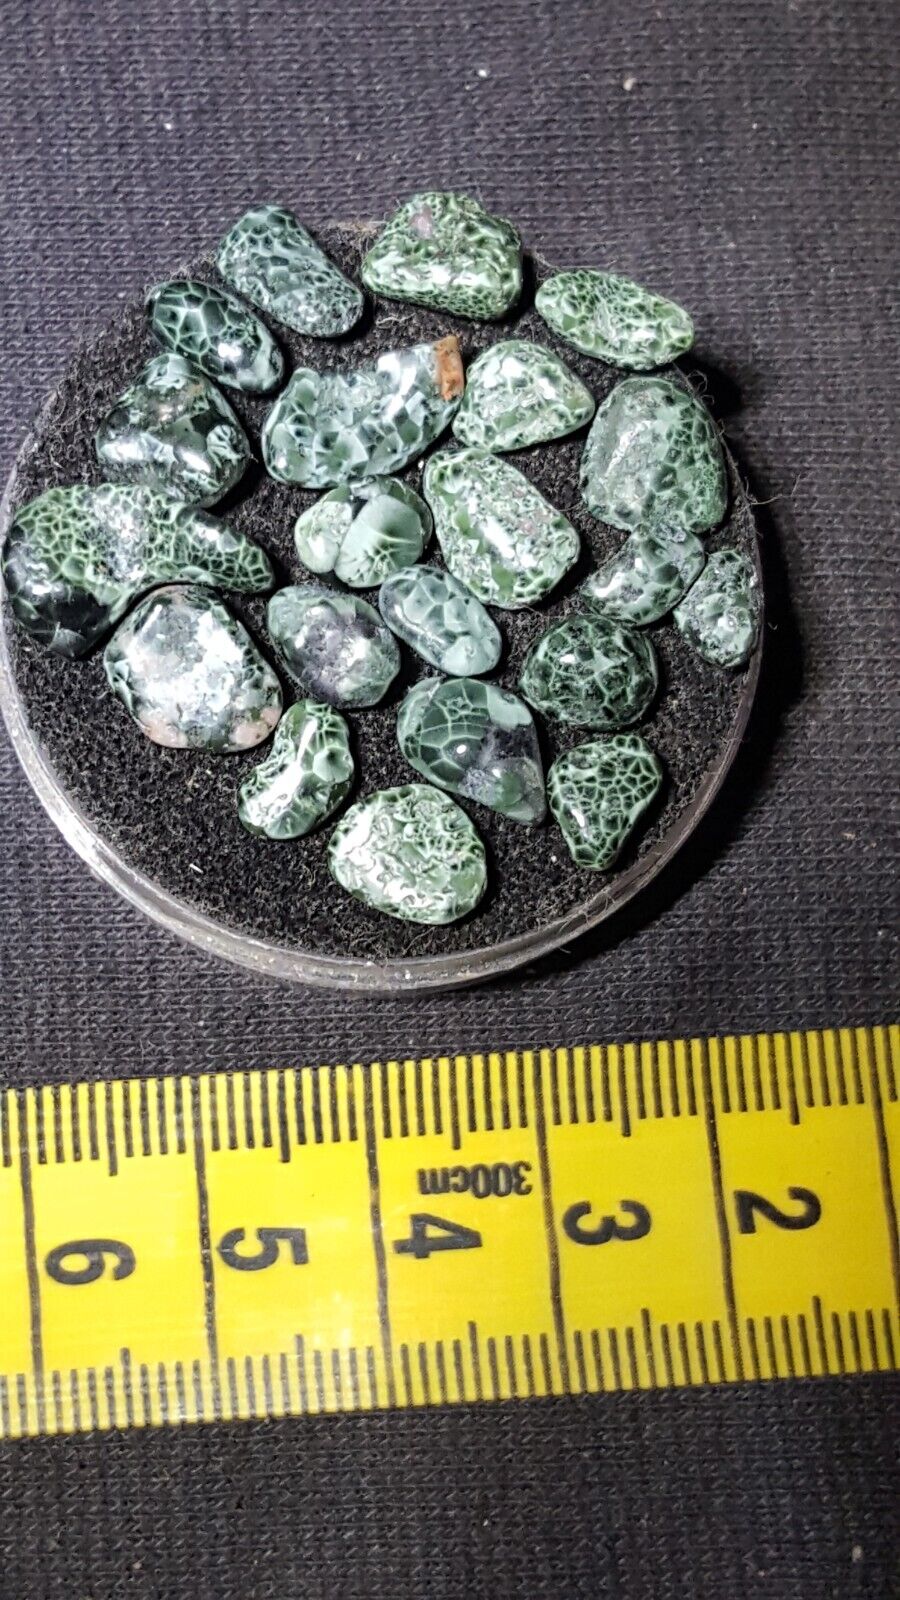 Polished Chlorastrolite Michigan Greenstone great looking gems.